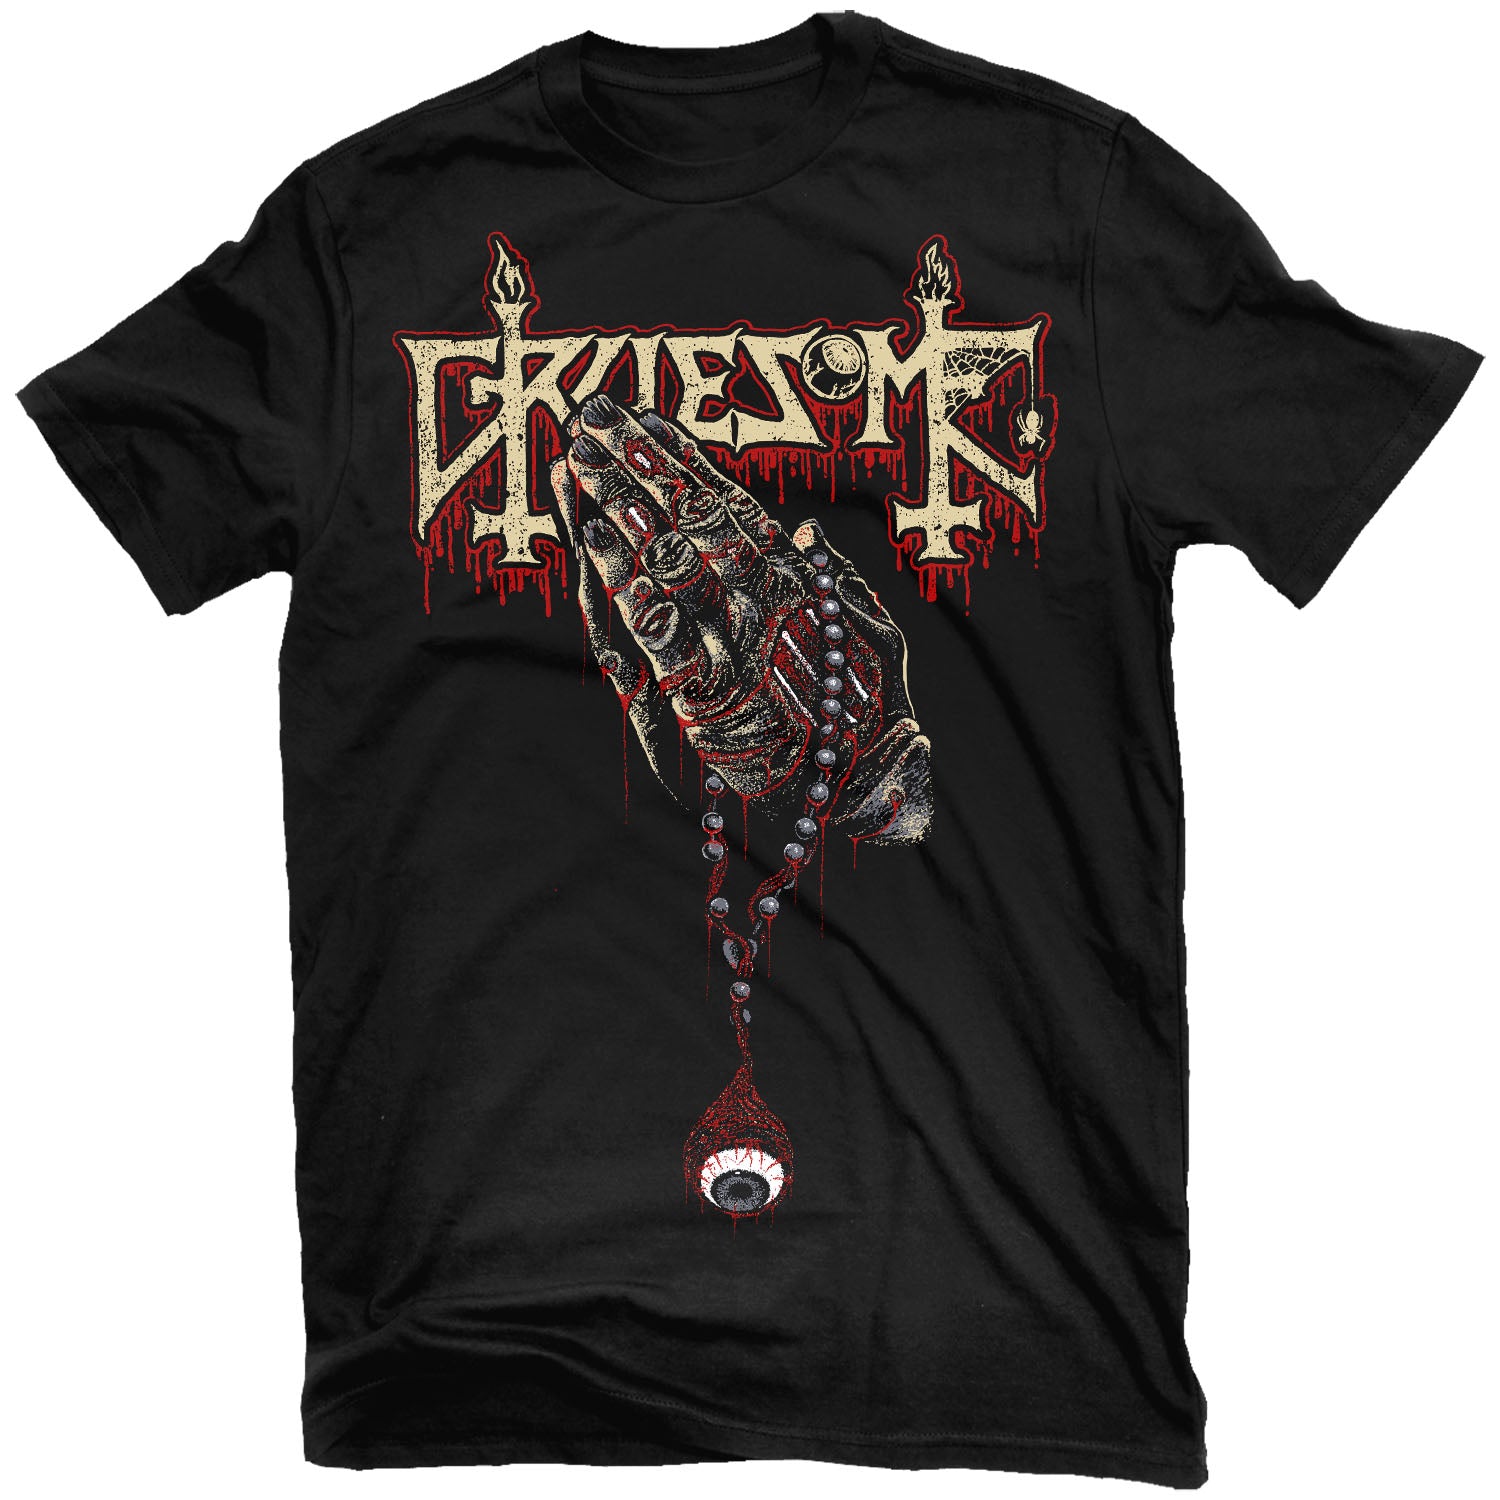 Gruesome "Crusade of Brutality" T-Shirt